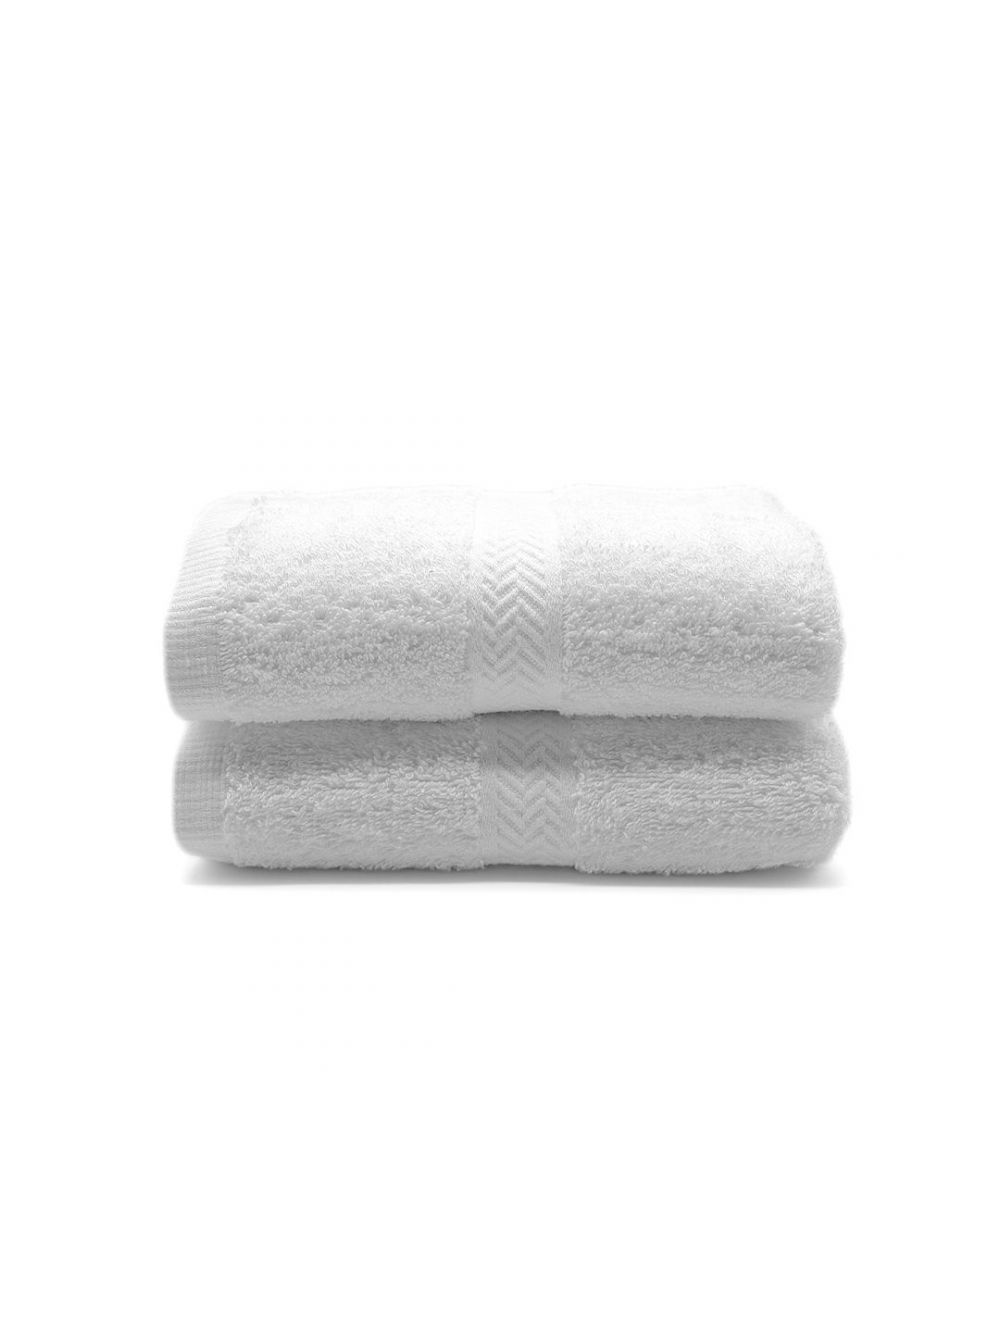 Rishahome 100% Cotton 2-Piece Hand Towel Set, Premium Collection, White-14RHWHT046